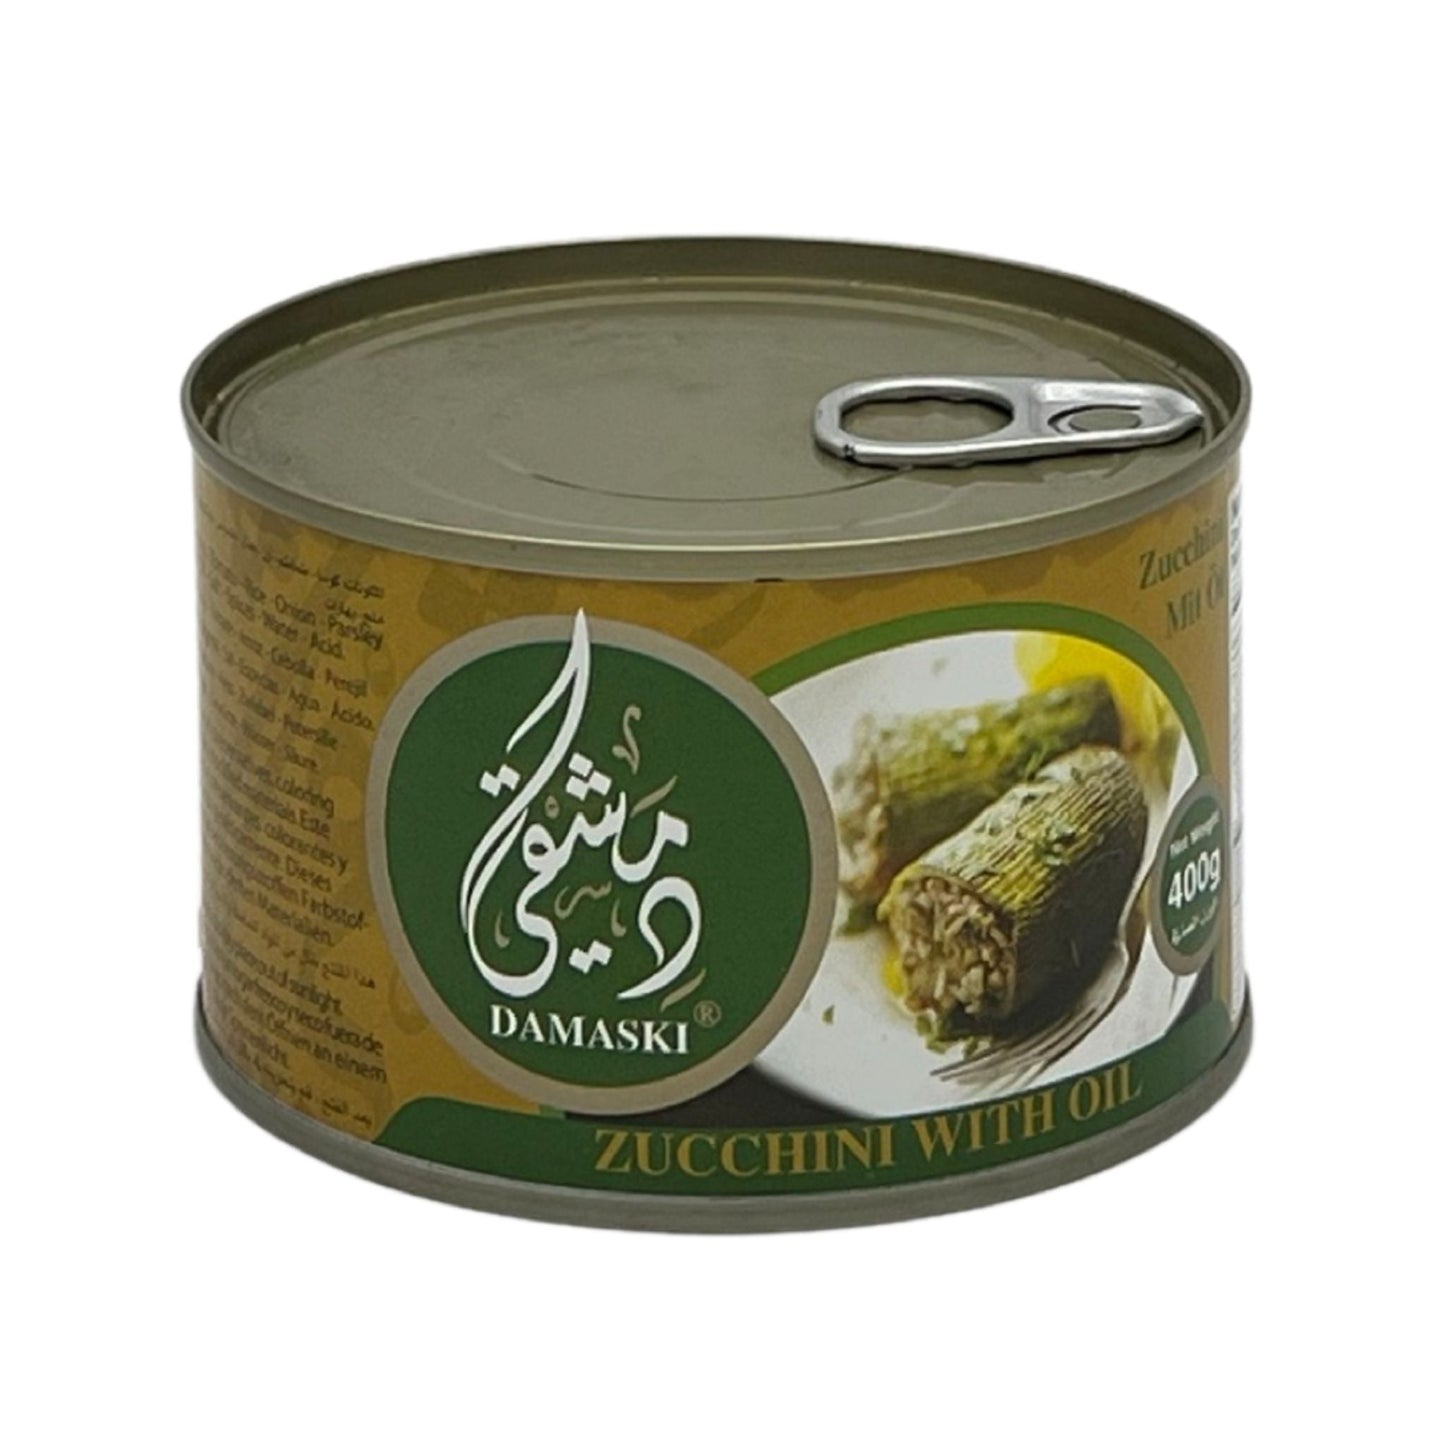 Damaski Zucchini With Oil Dolma 400g